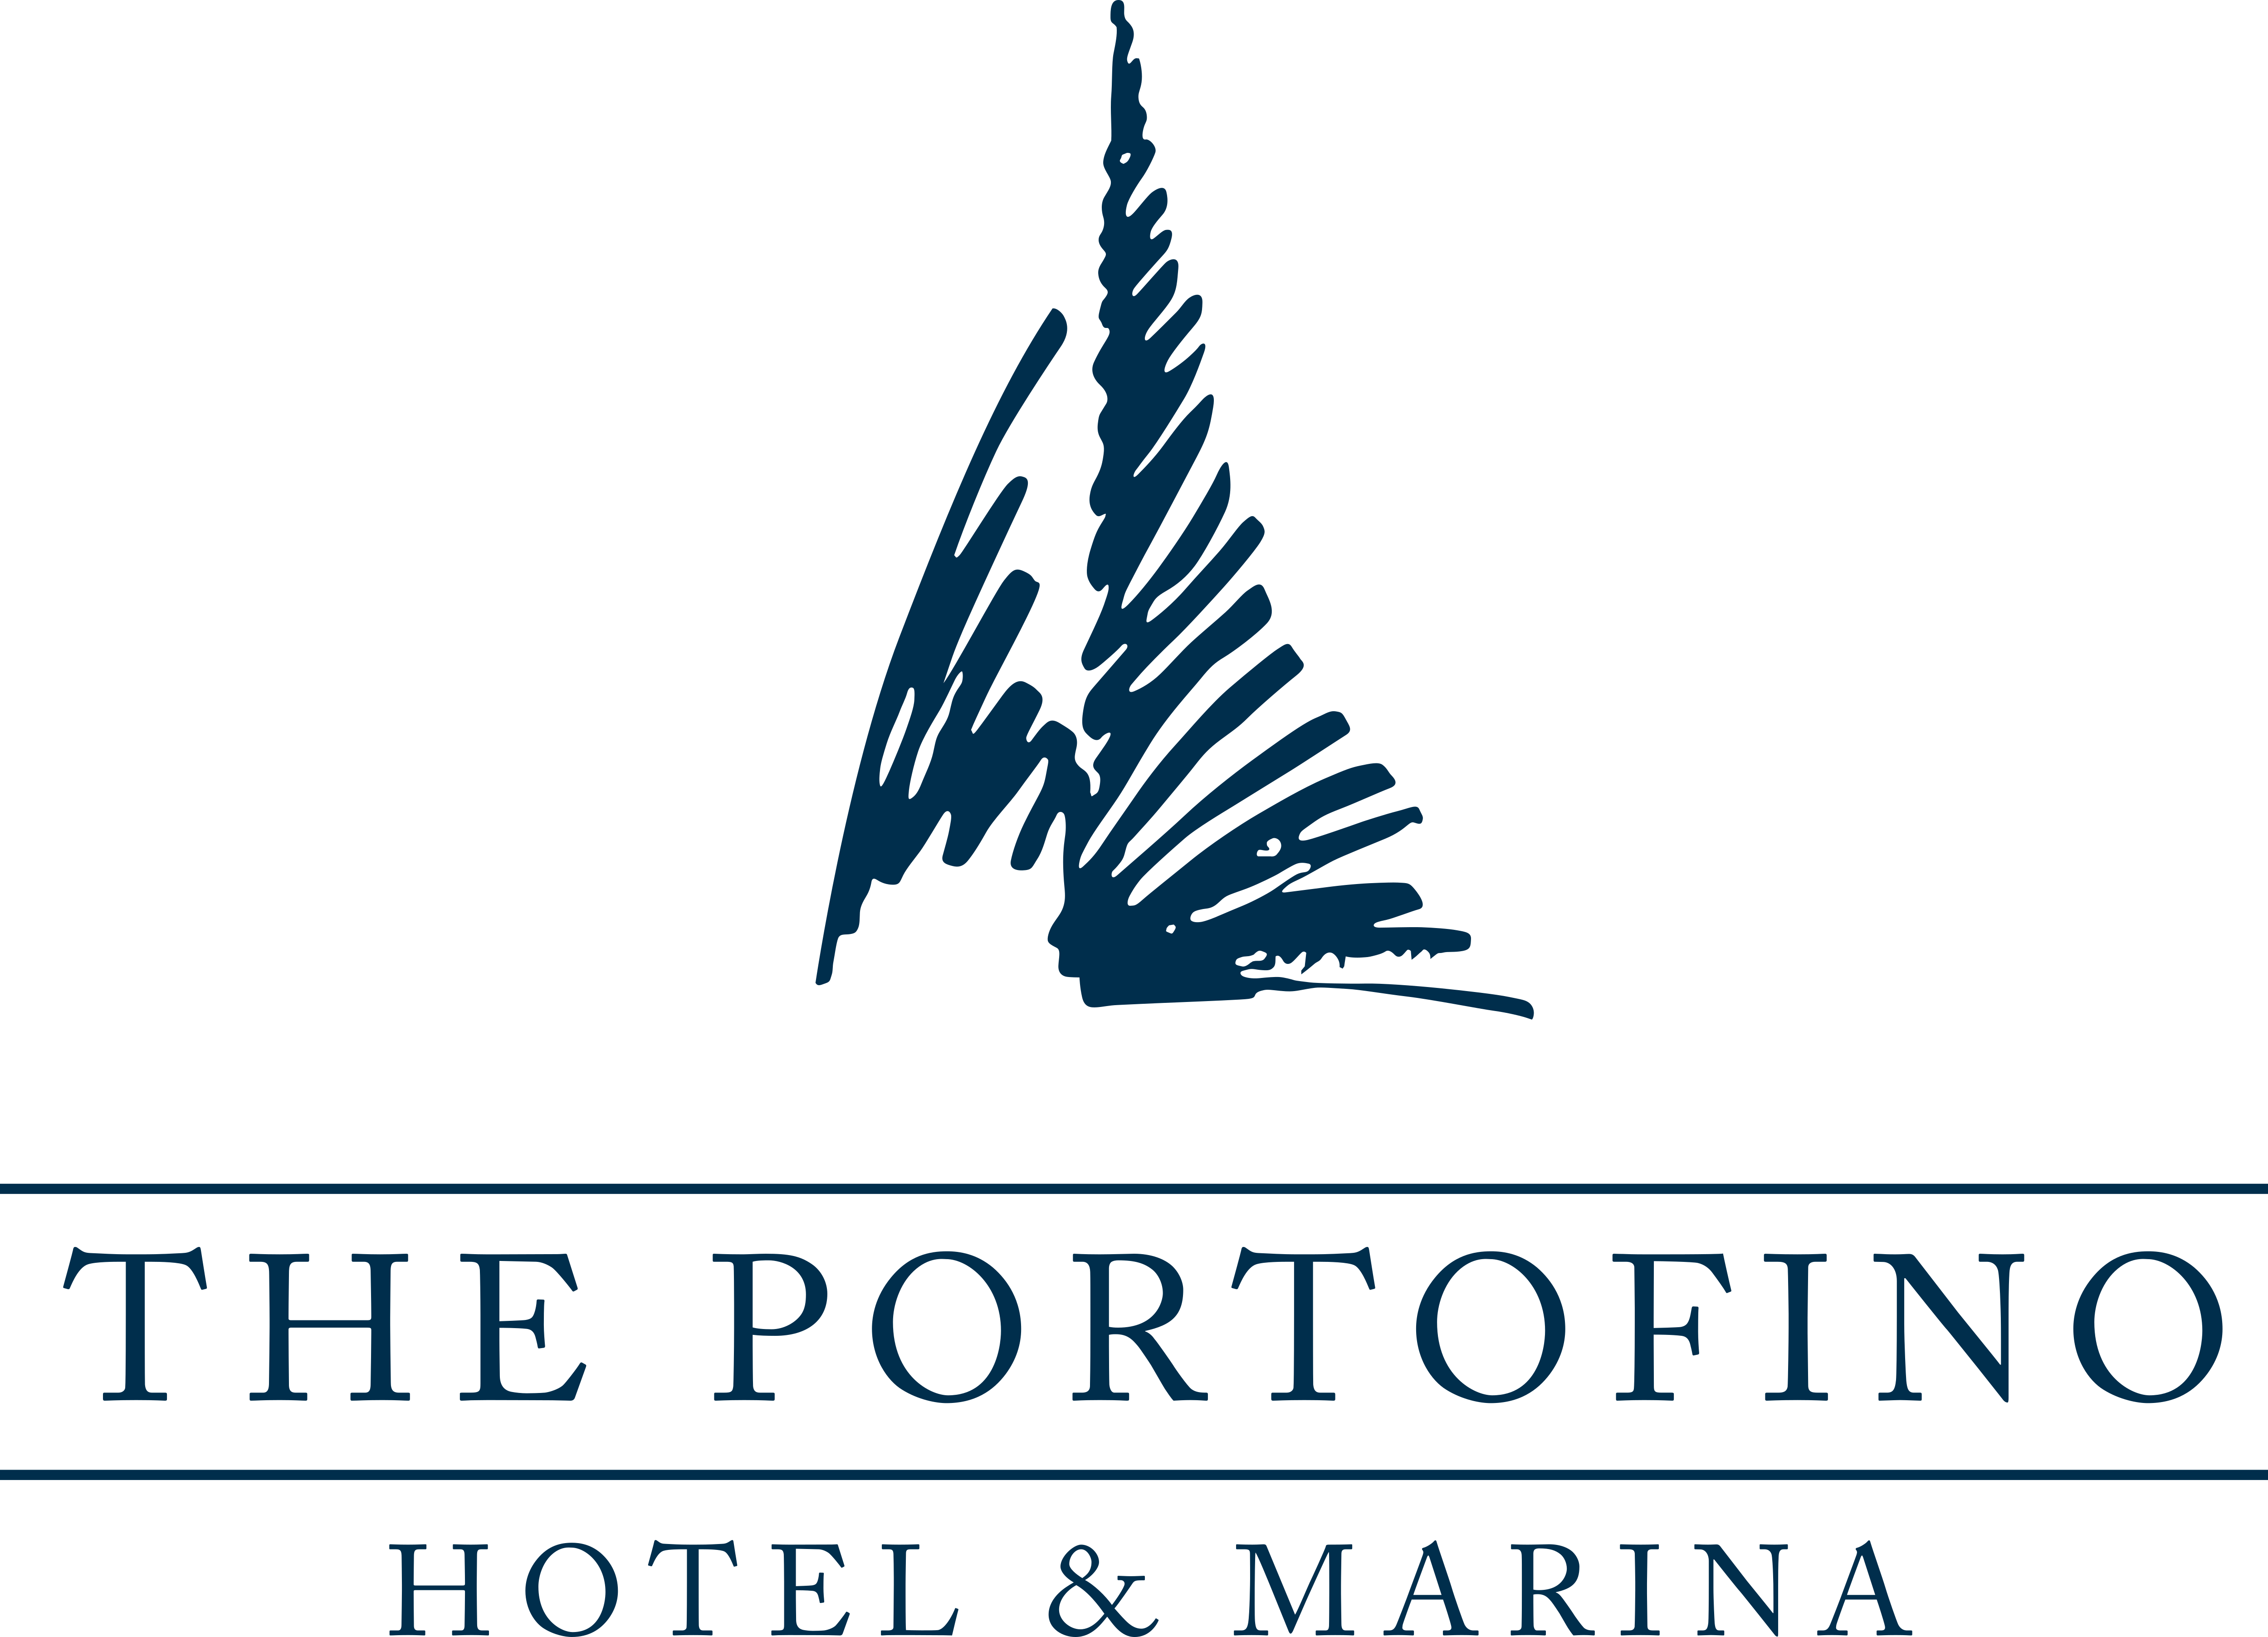 Portofino Hotel & Marina – Logos Download